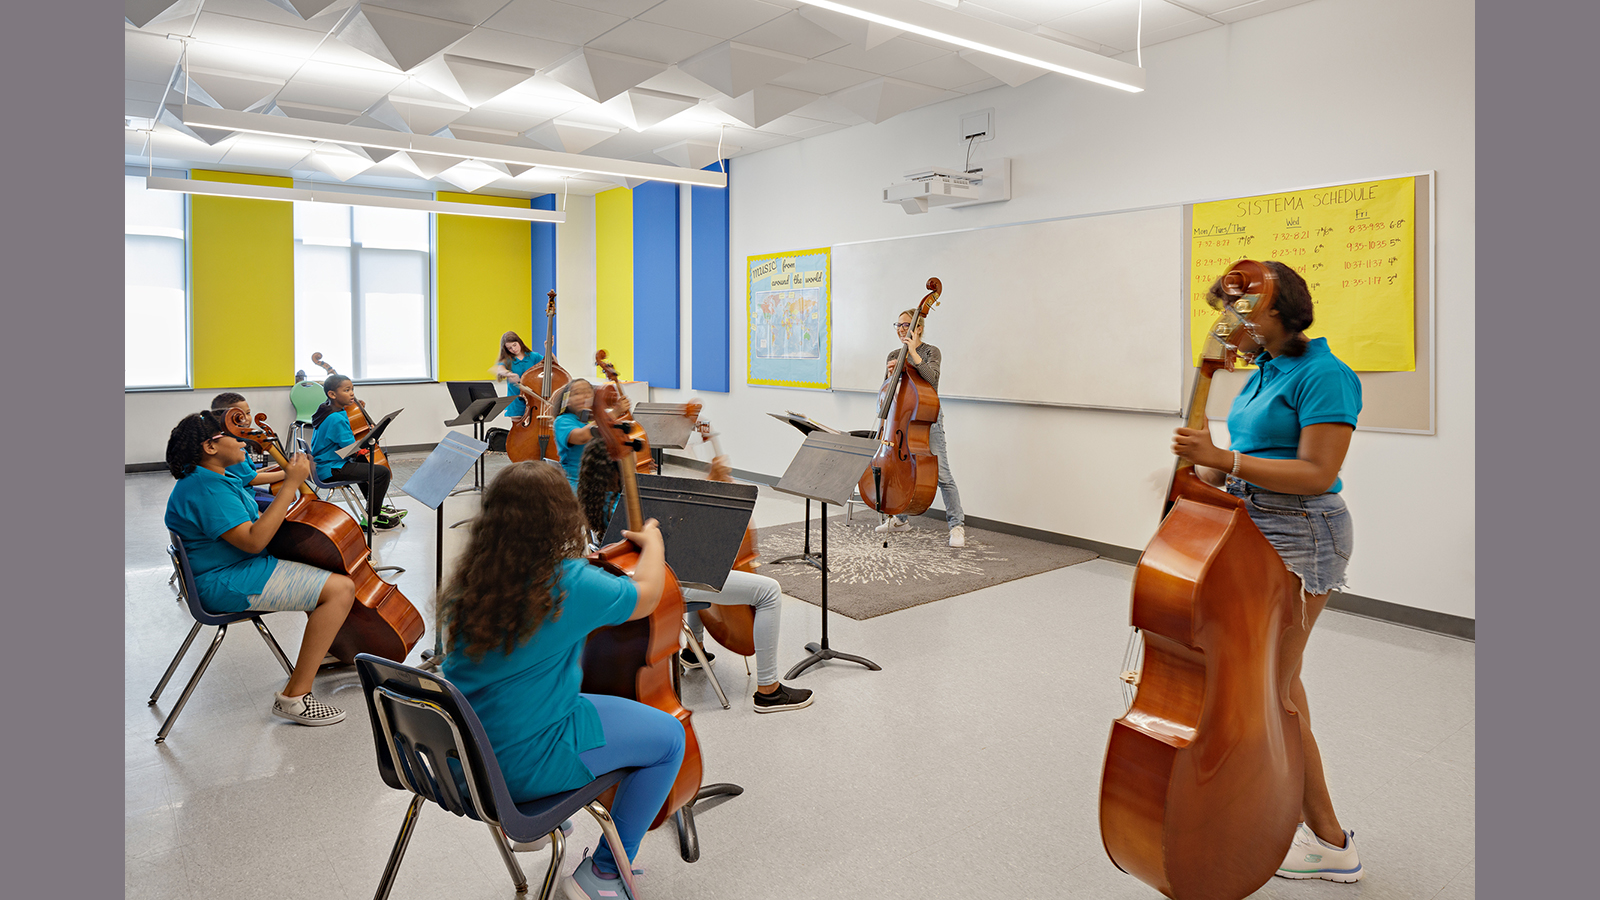 Conservatory Lab Charter School music room